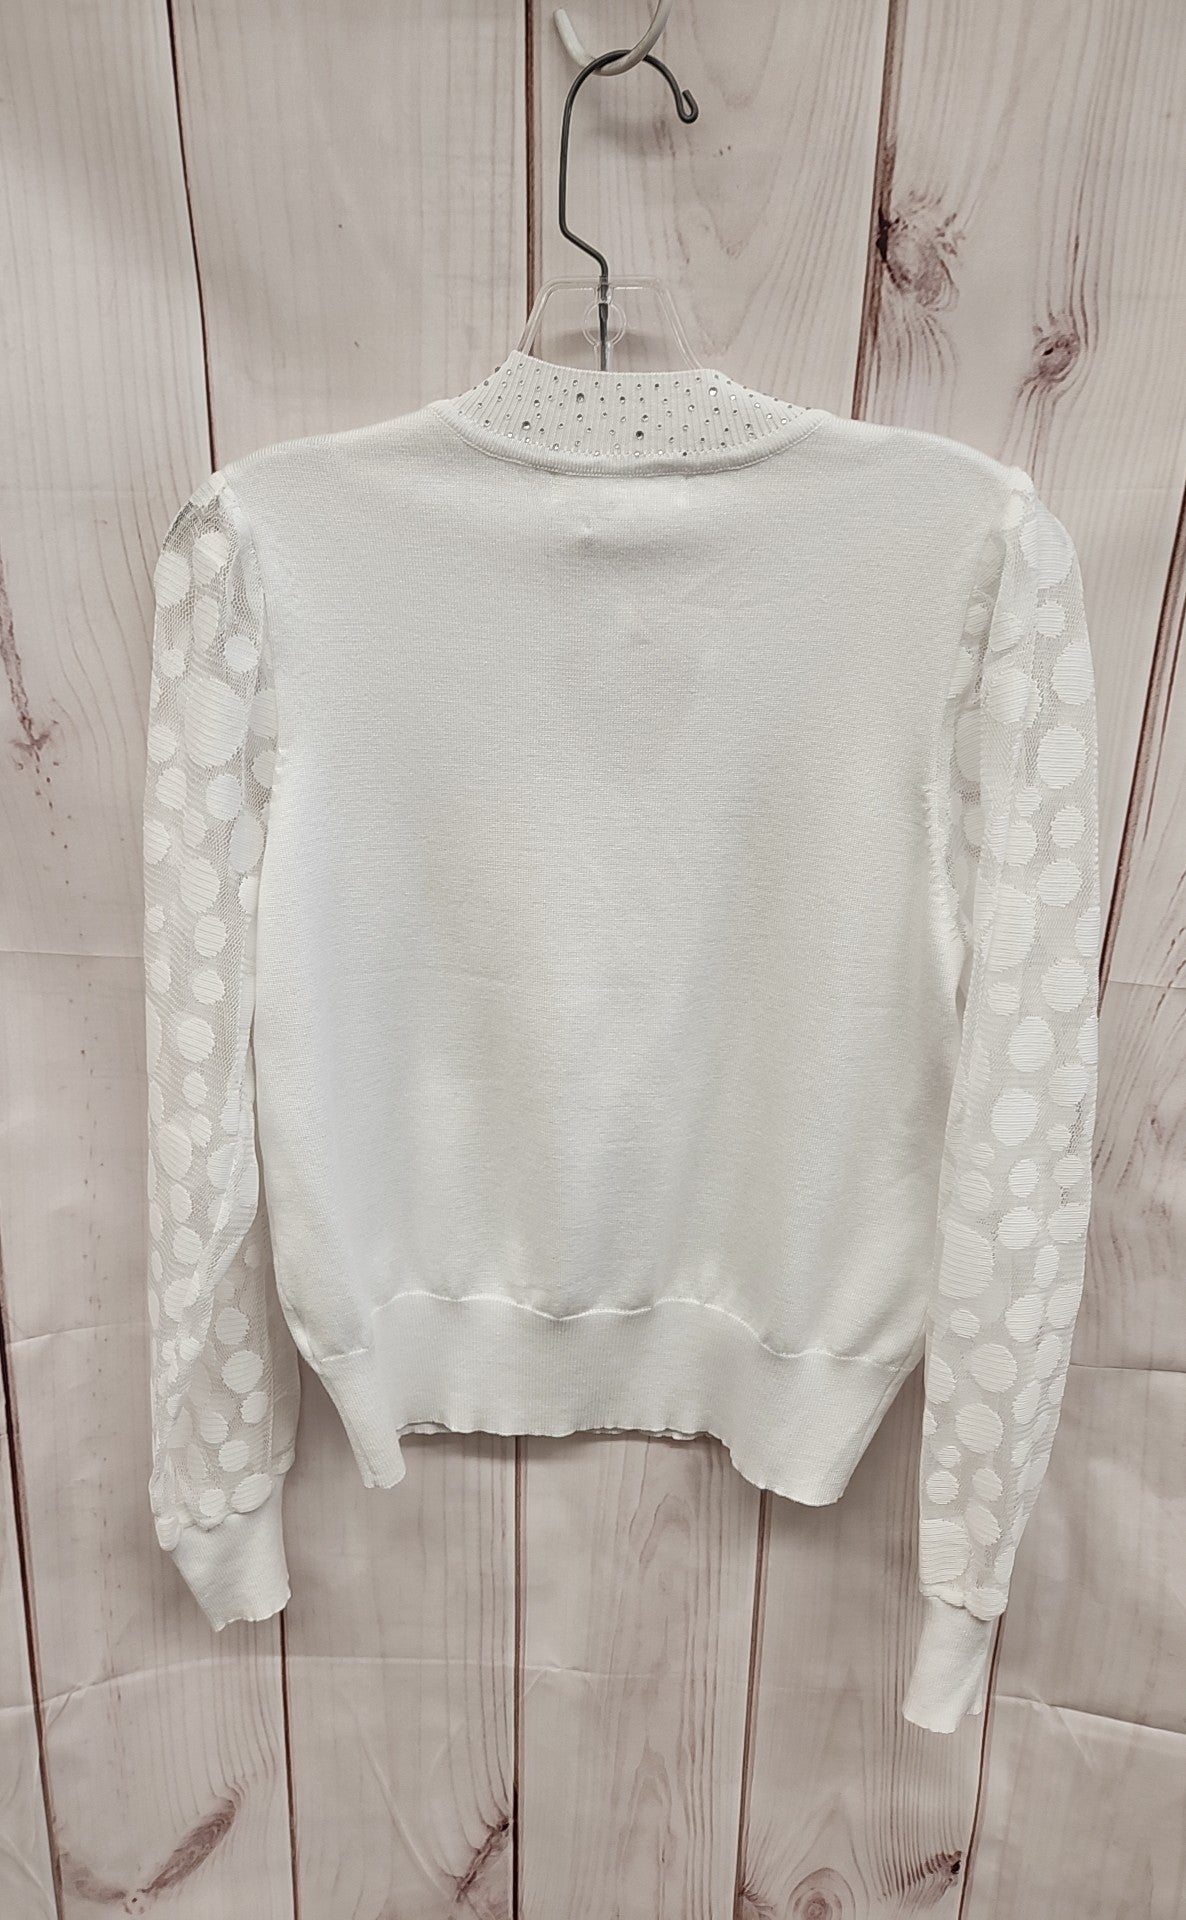 Madison + Hudson Women's Size M White Sweater